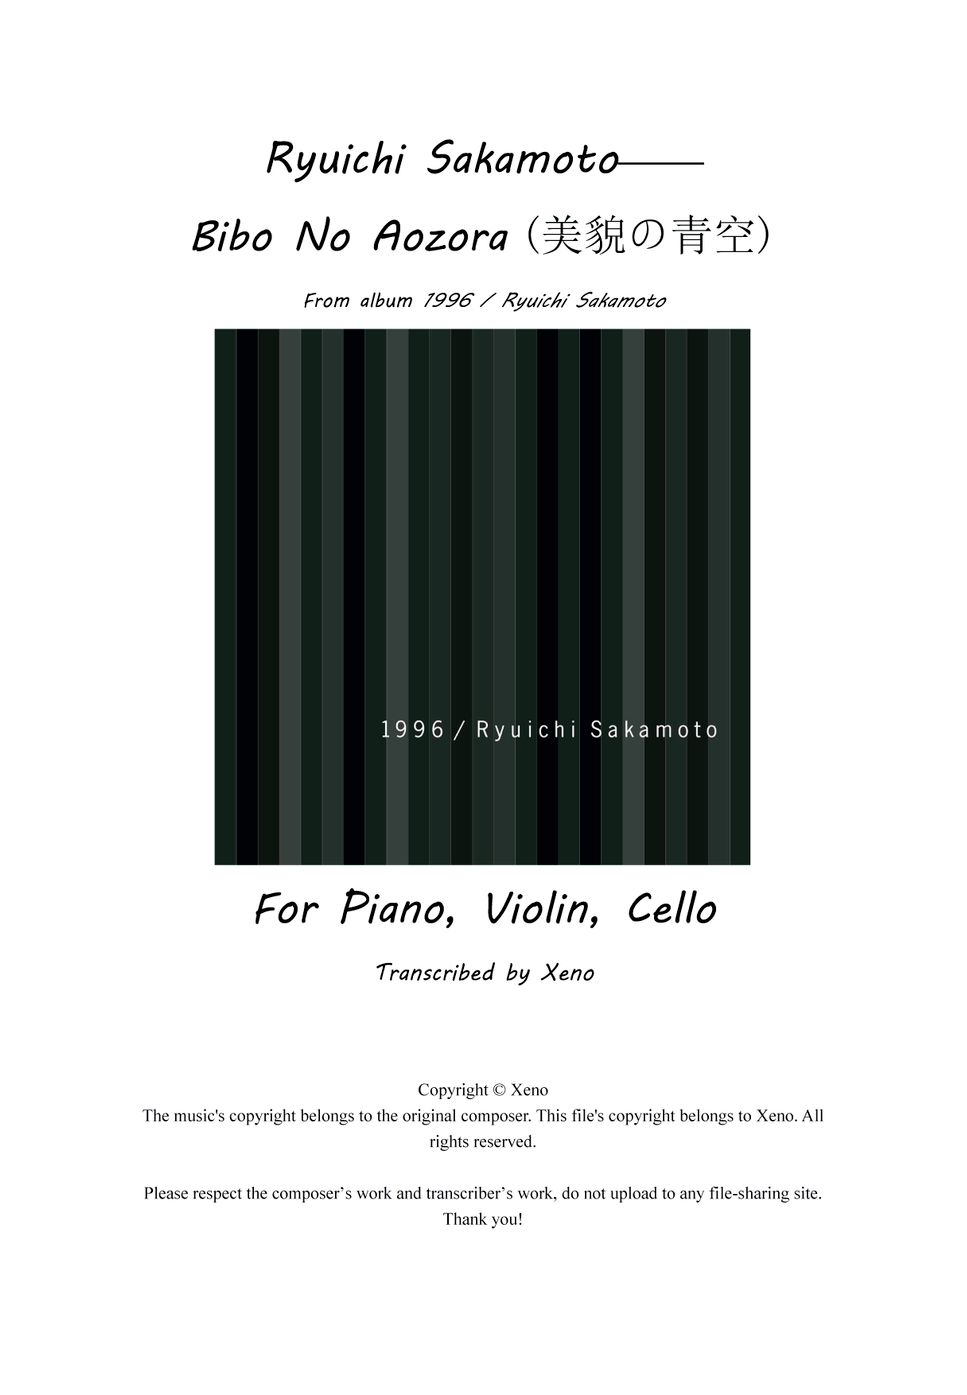 Ryuichi Sakamoto - Bibo No Aozora (Score and Parts) (Edited and corrected from scores presented along with the Ryuichi Samamoto's album "1996" vinyl.) by Xeno